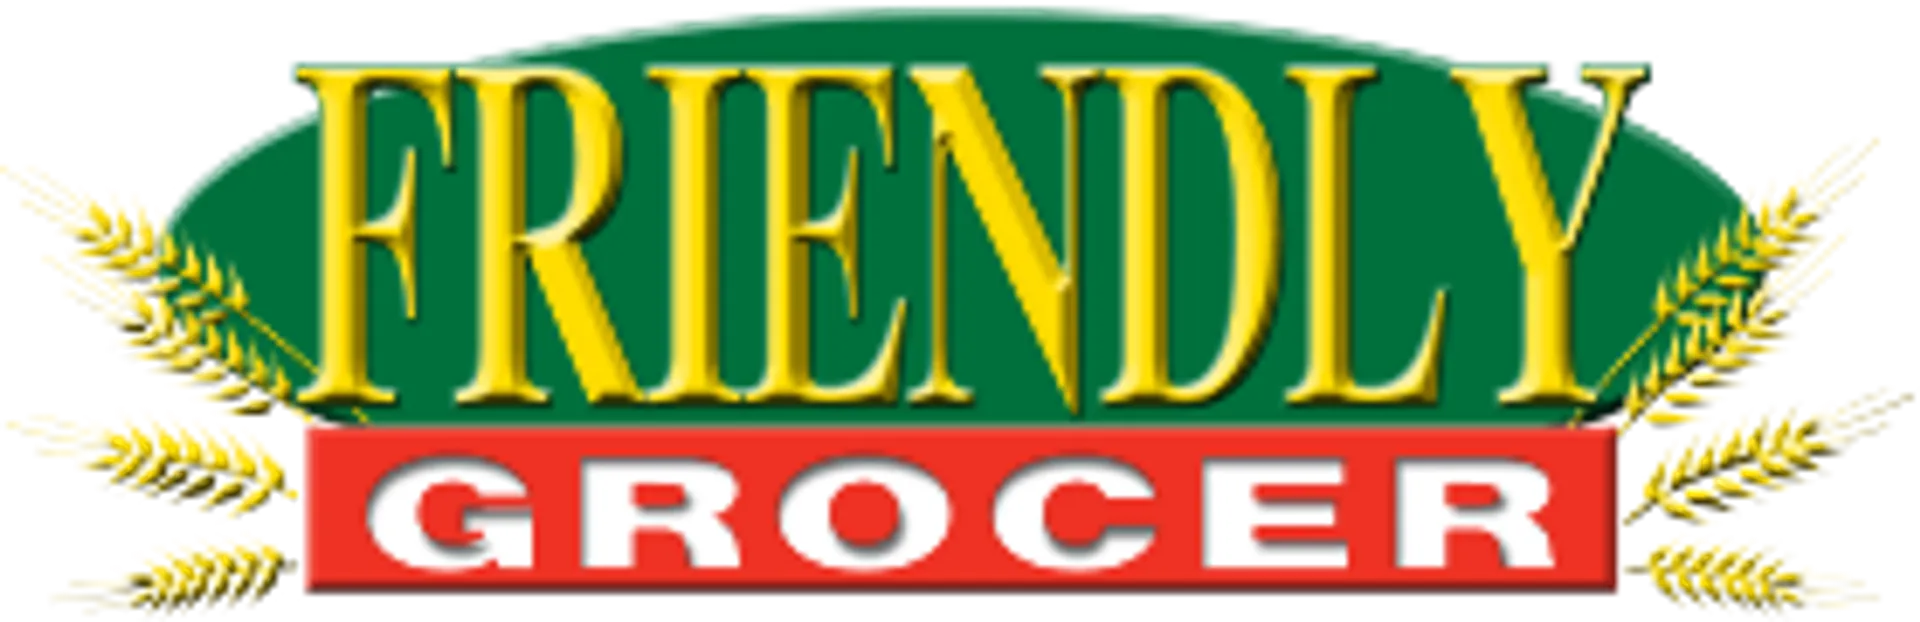 FRIENDLY GROCER logo